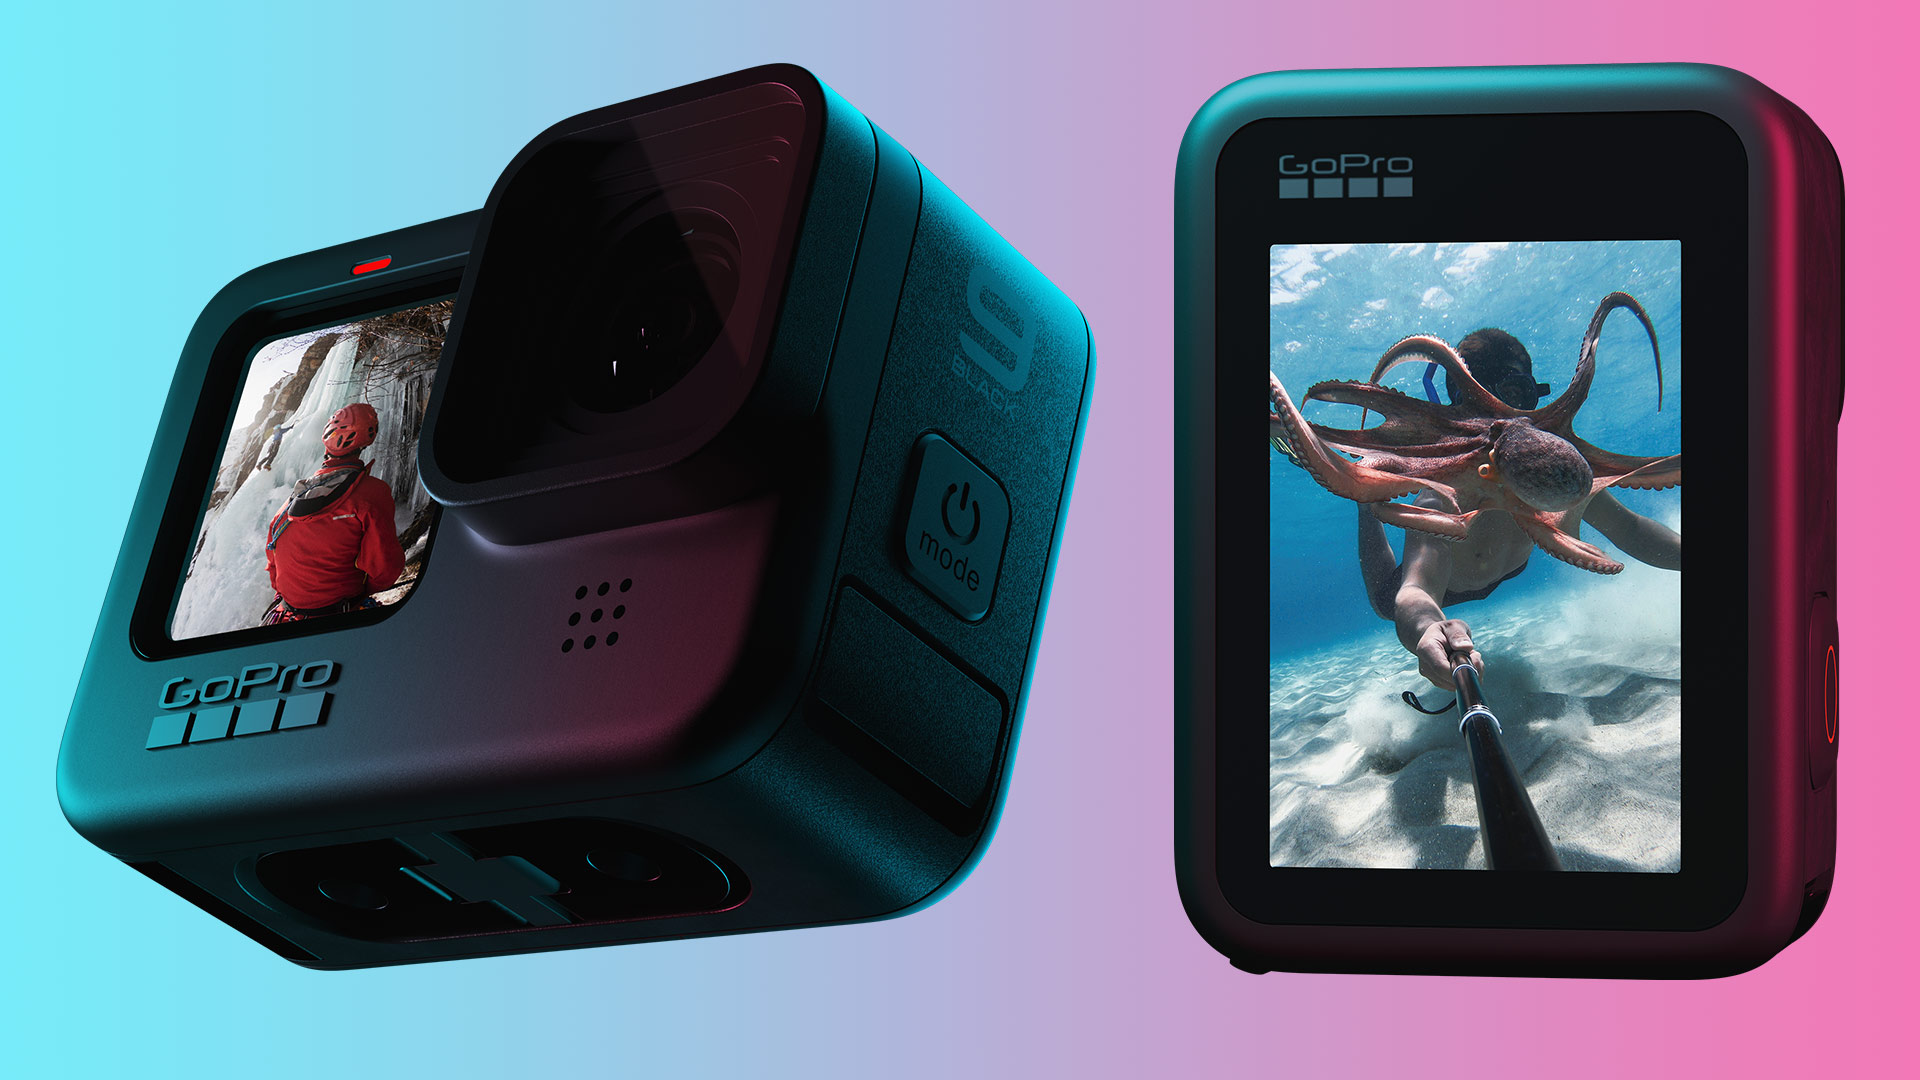 GoProがHERO9 Blackをリリース | CineD